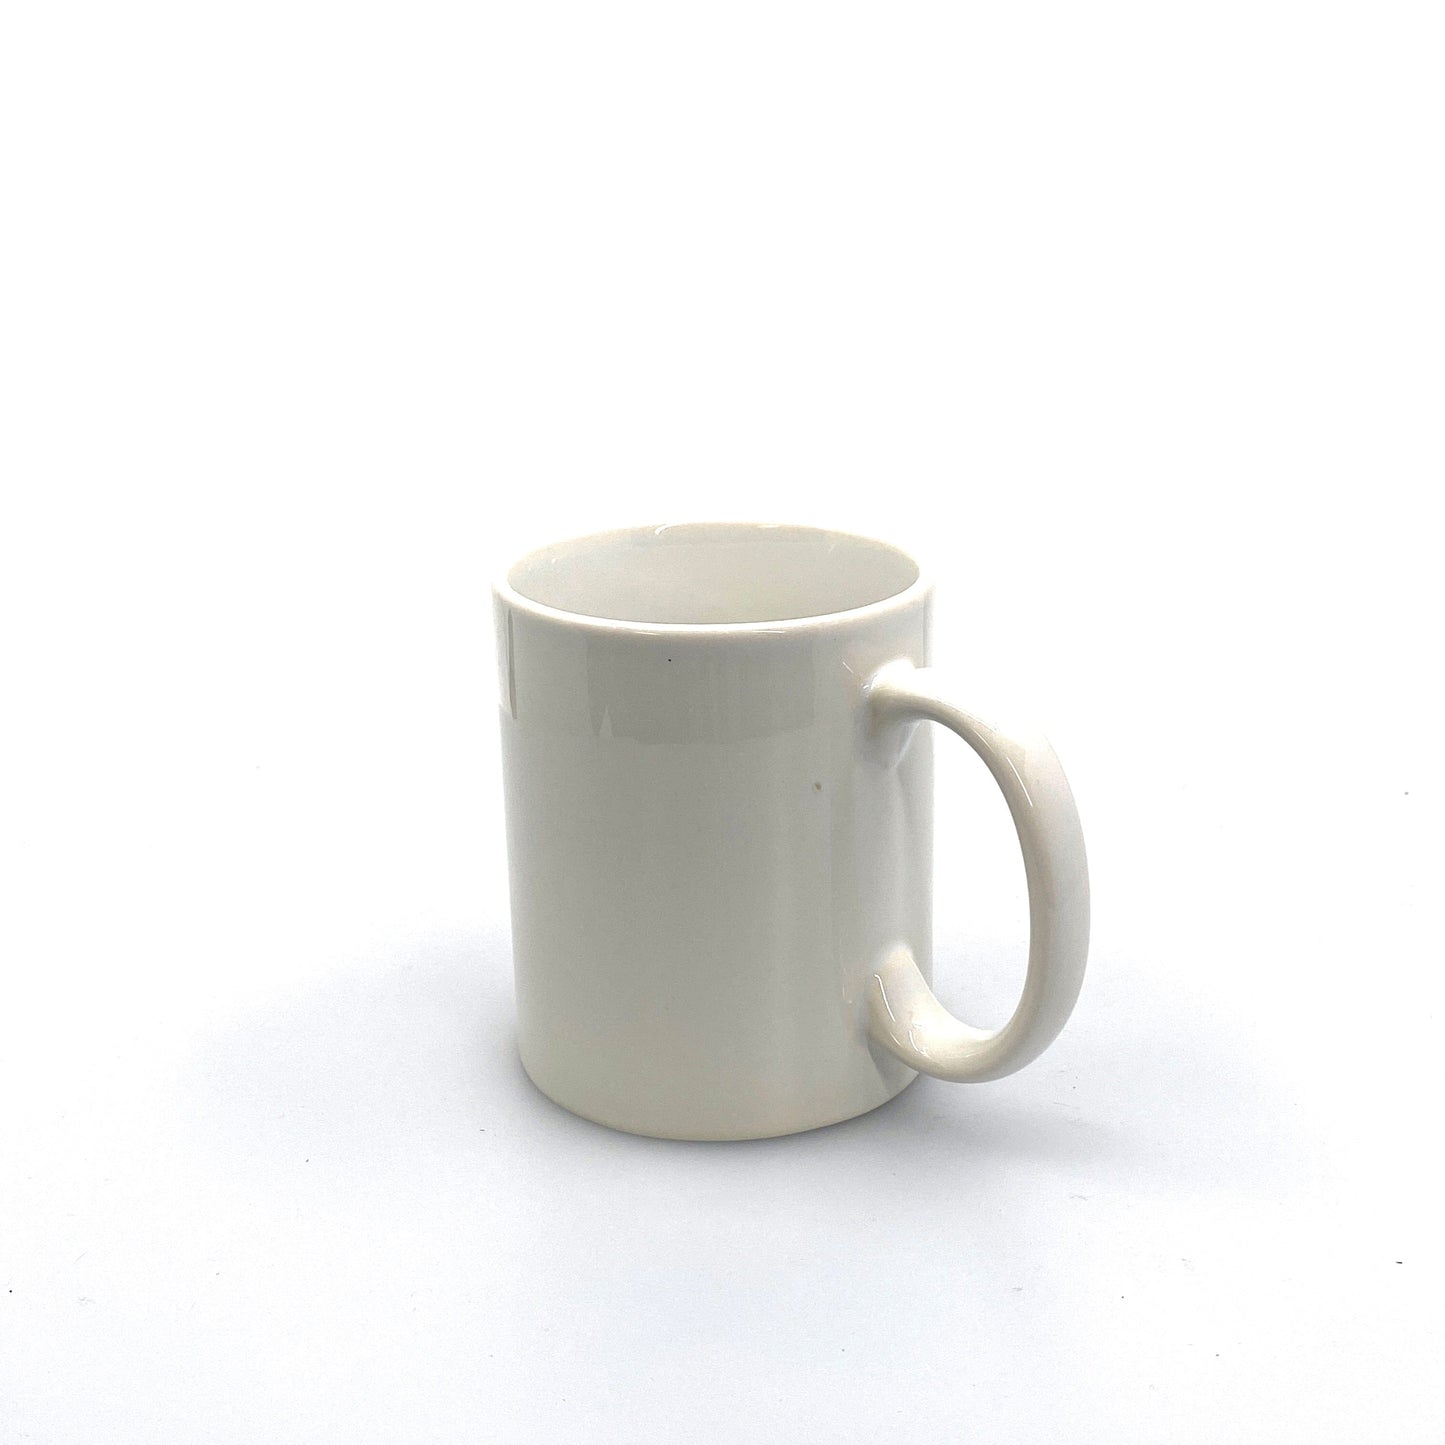 Novelty “Netflix & Chill” Adult Humor White Ceramic Coffee Mug